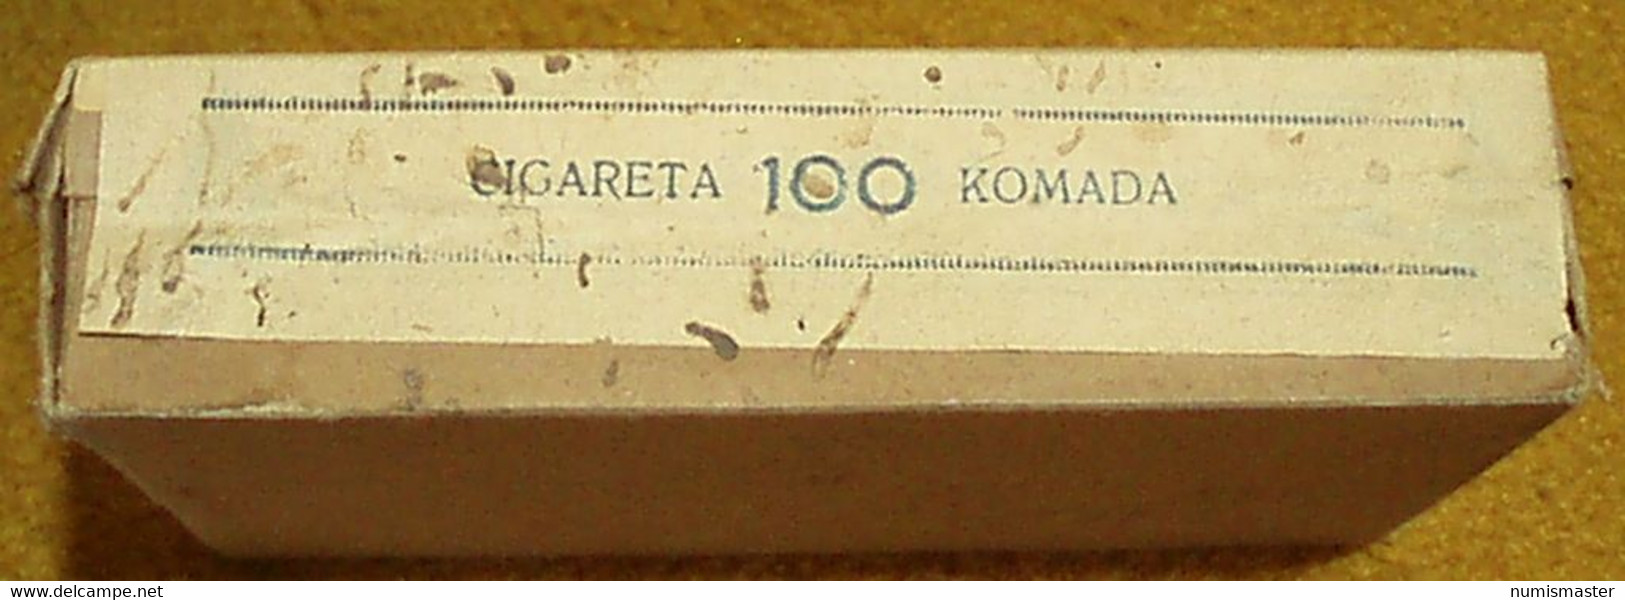 DF YUGOSLAVIA , HERCEGOVINA CIGARETES 100 PIECES EMPTY BOX - Estuches Para Cigarrillos (vacios)